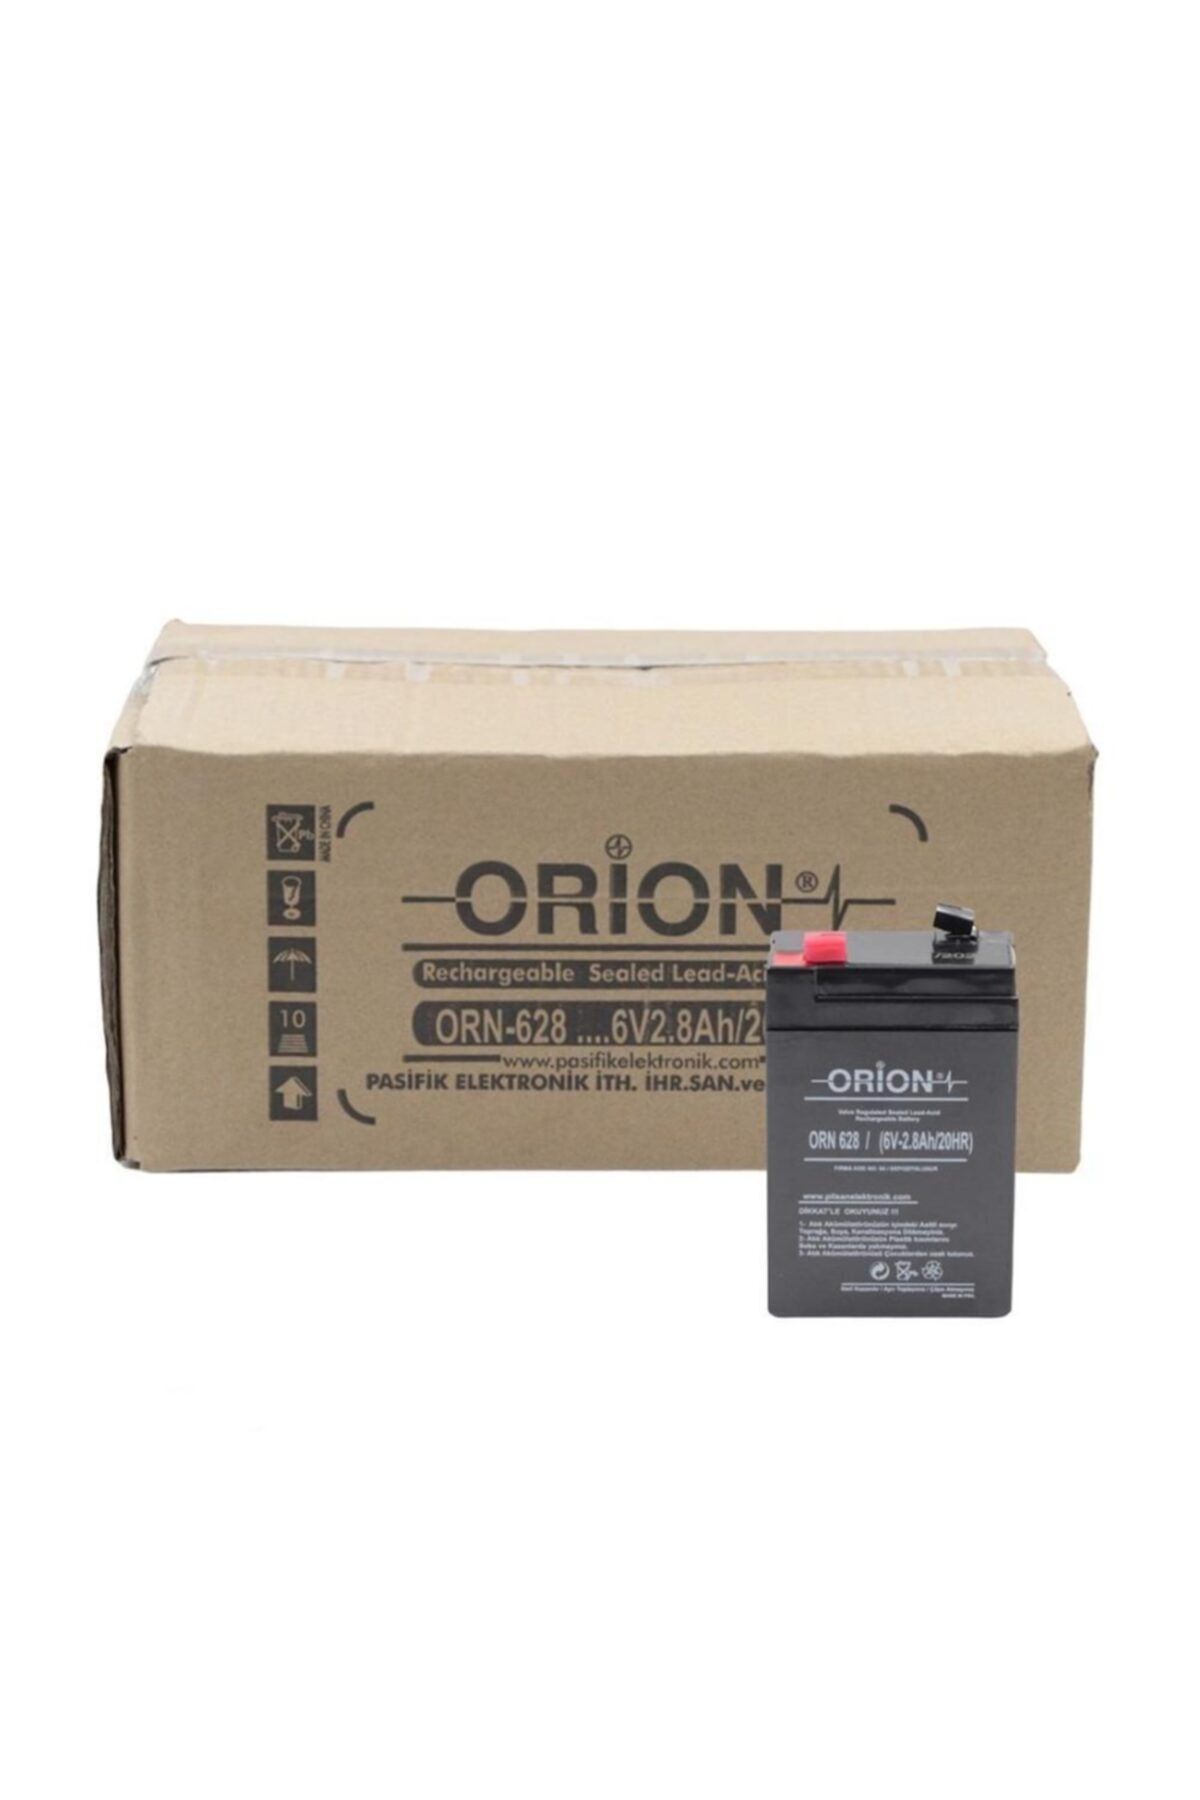 Orion 6v 2.8ah 20 Adet Bakımsız Kuru Akü